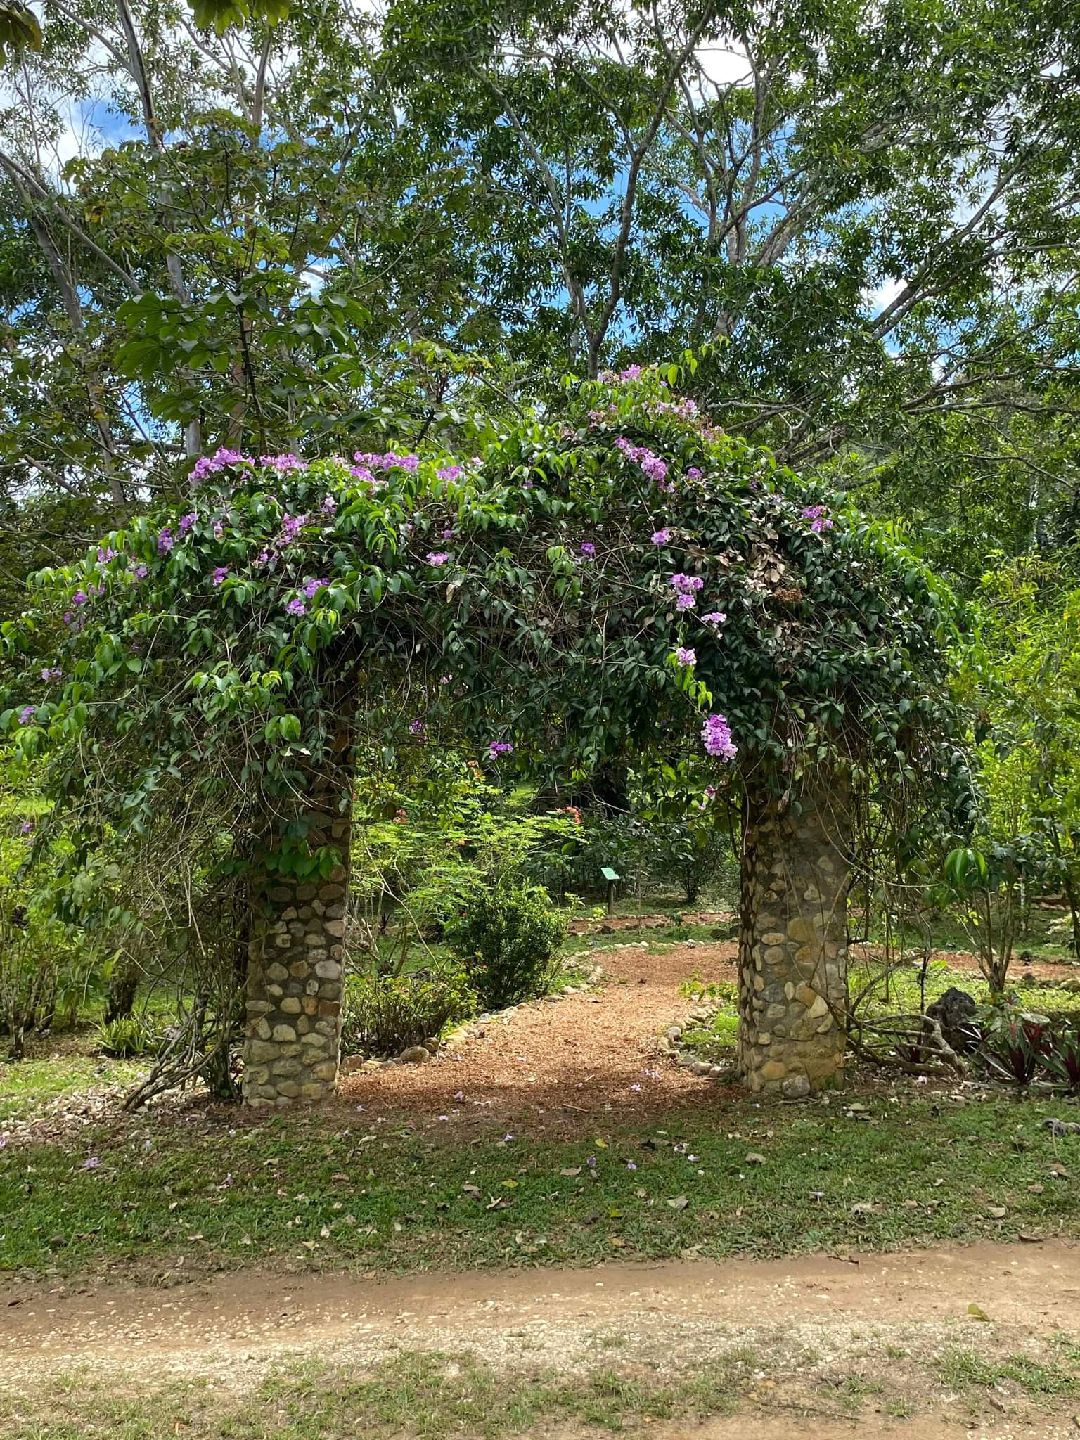 Exploring the Belize Botanic Gardens: A Tour of Beauty, Medicinal Plants, and Maya Culture